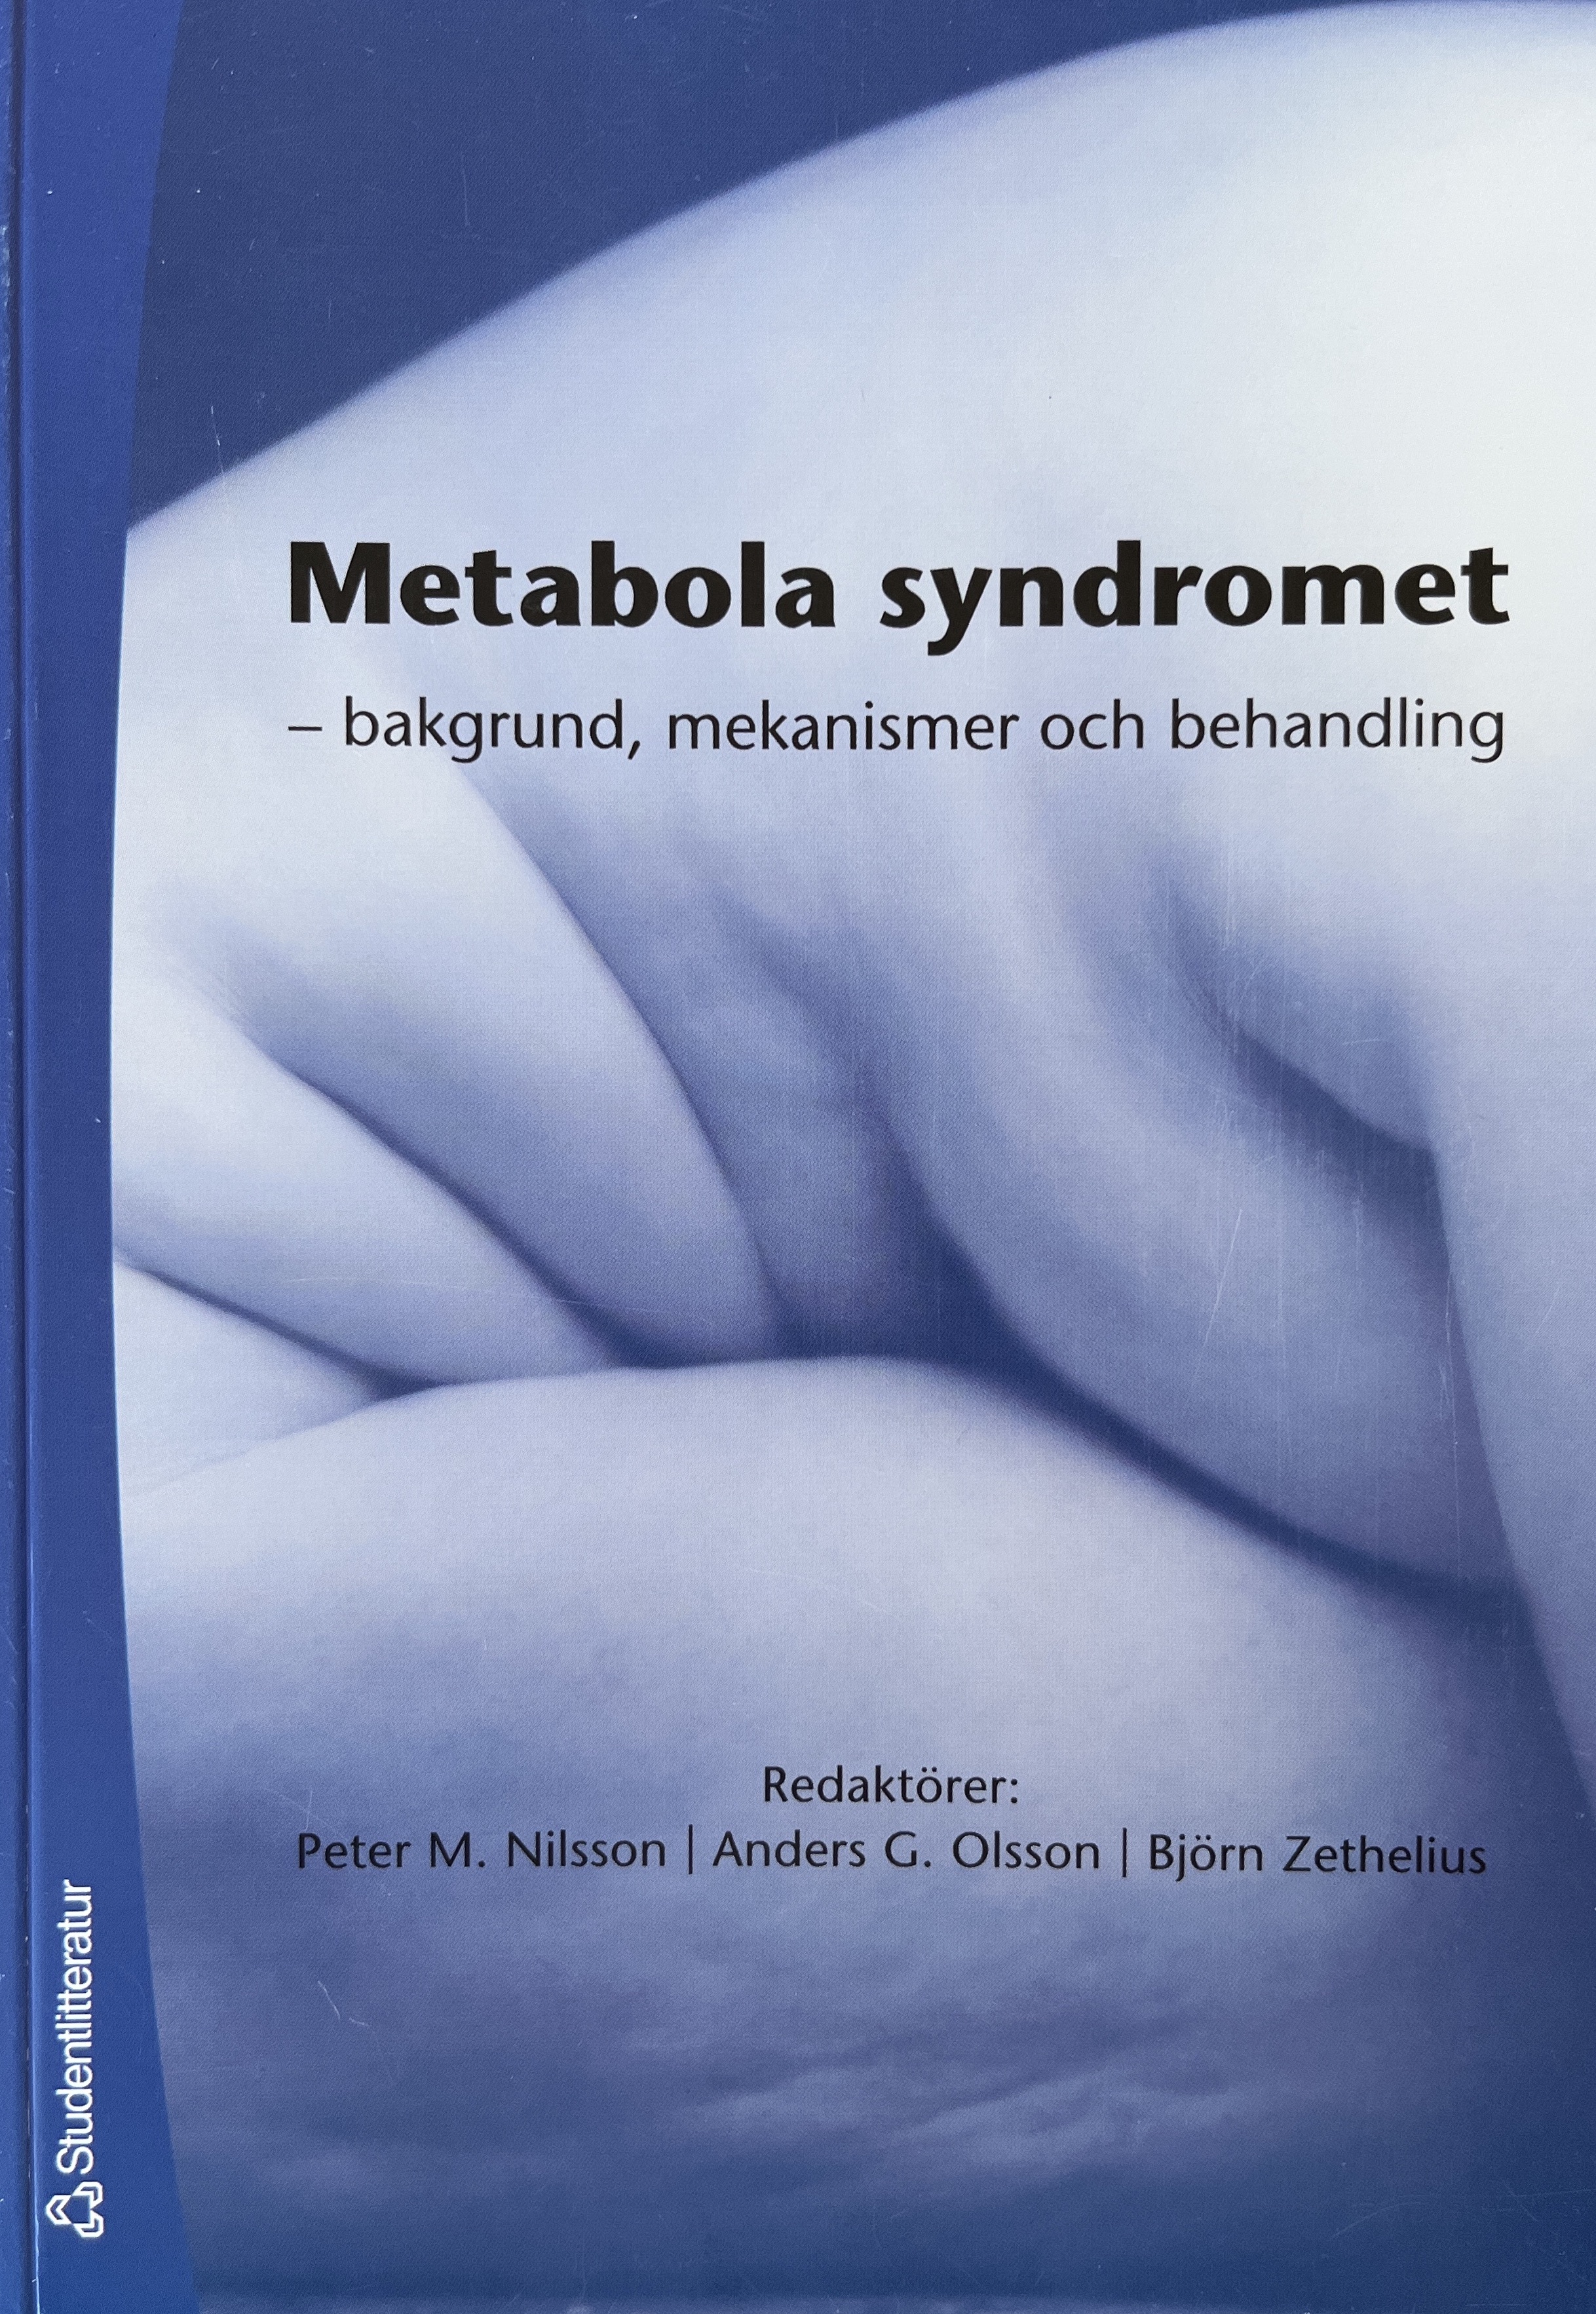 Metabola syndromet- bakgrund, mekanismer och behandling; Peter M. Nilsson, Anders G. Olsson, Björn Zethelius, AstraZeneca, Astra AB; 2006